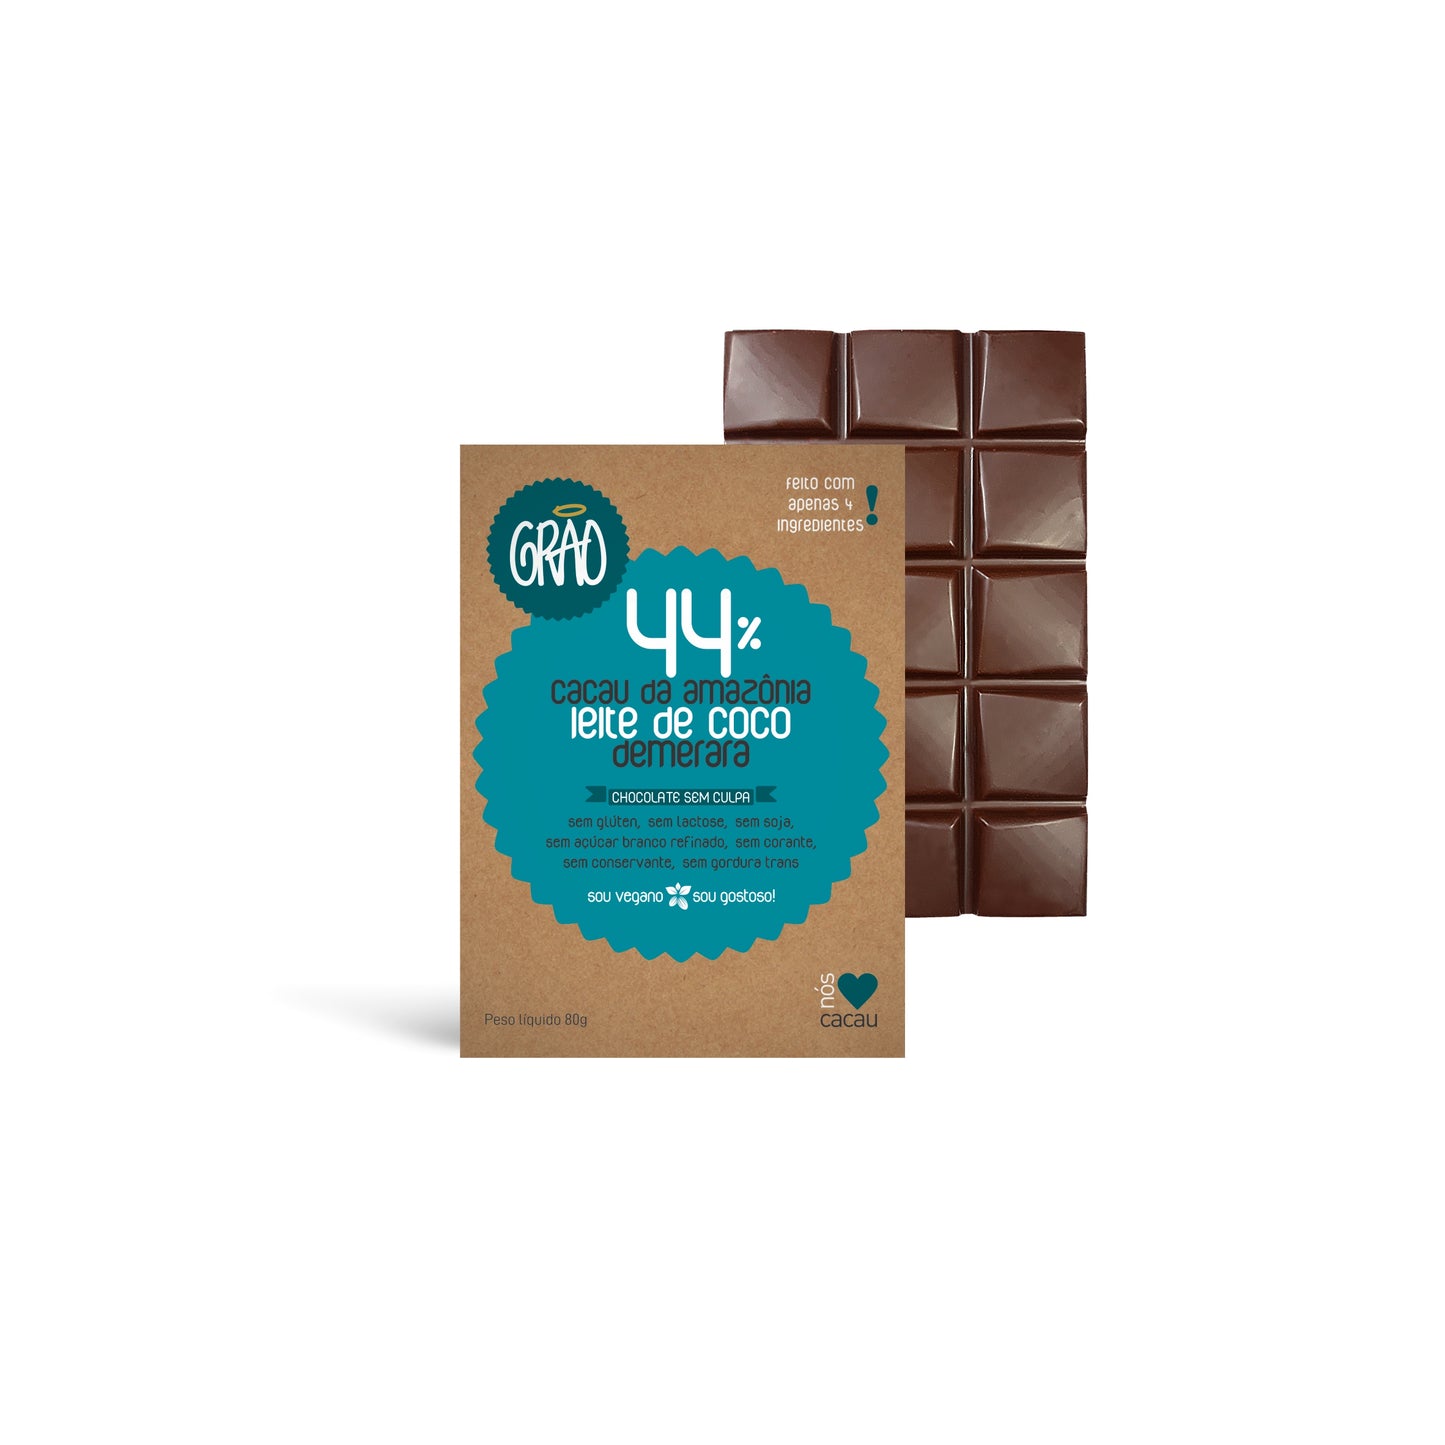 Trufa de Chocolate 44% Cacau ao Leite c/ Cookies 30g